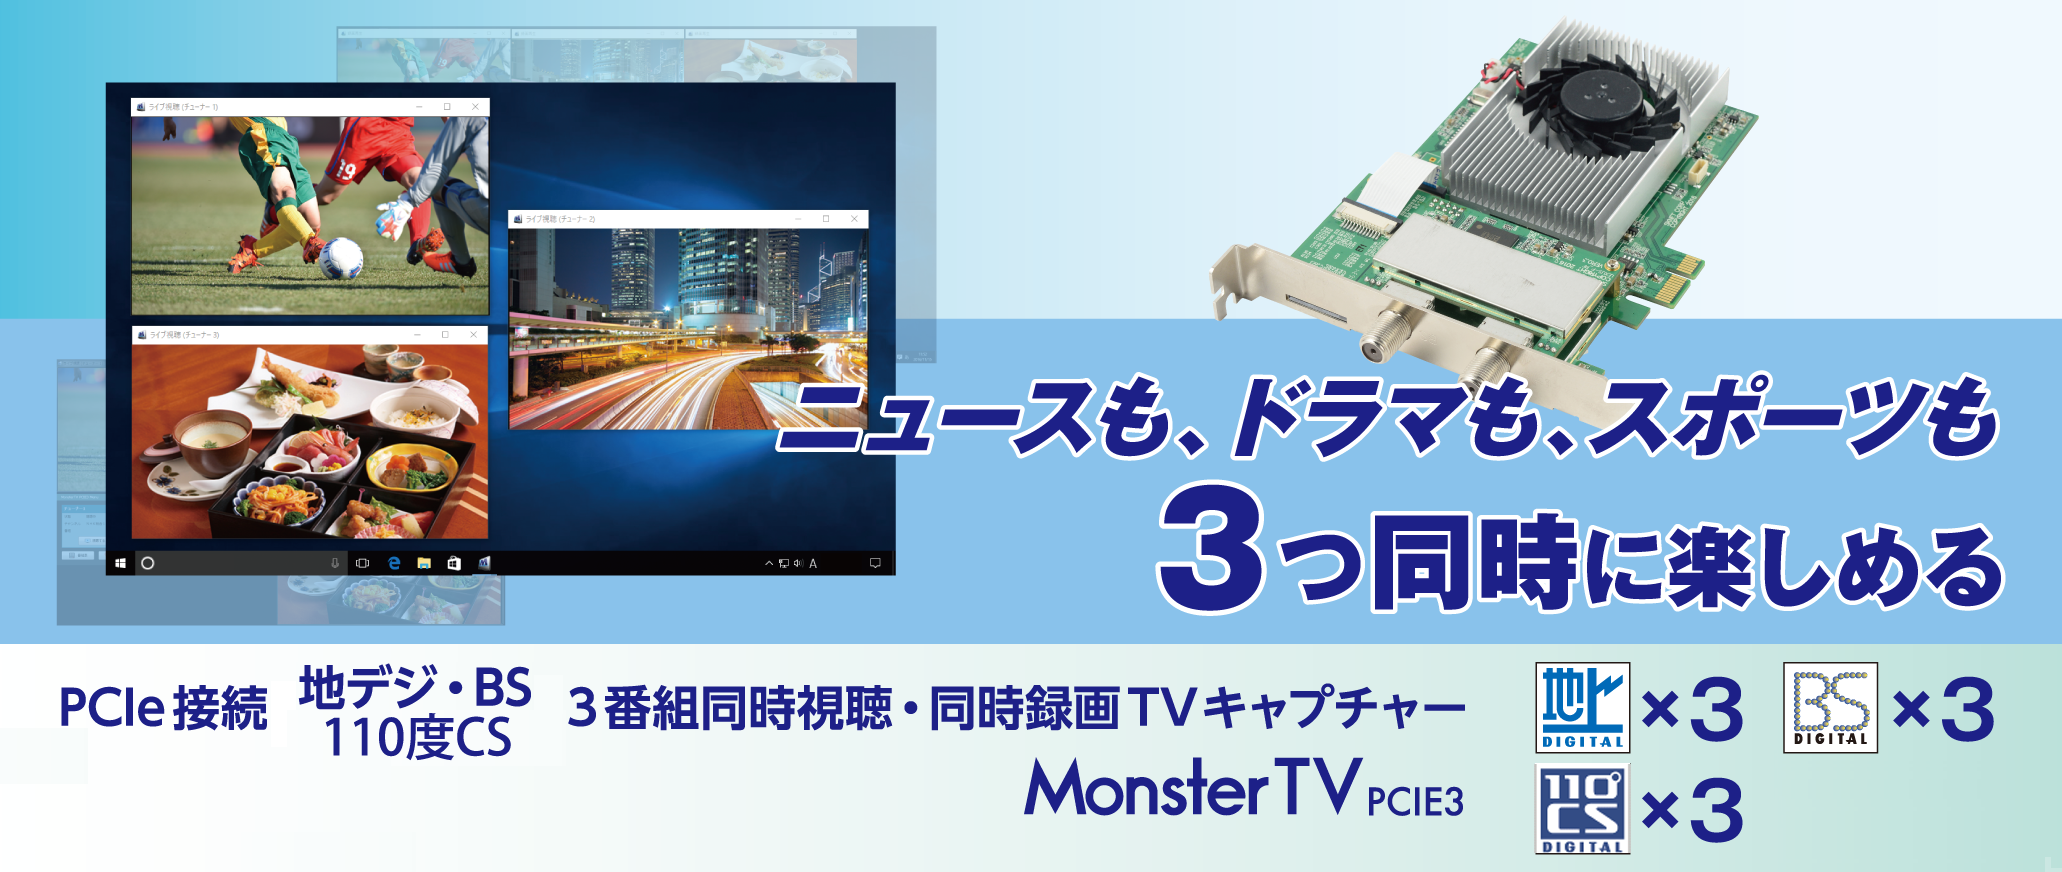 PC用テレビチューナーMonsterTV PCIE3